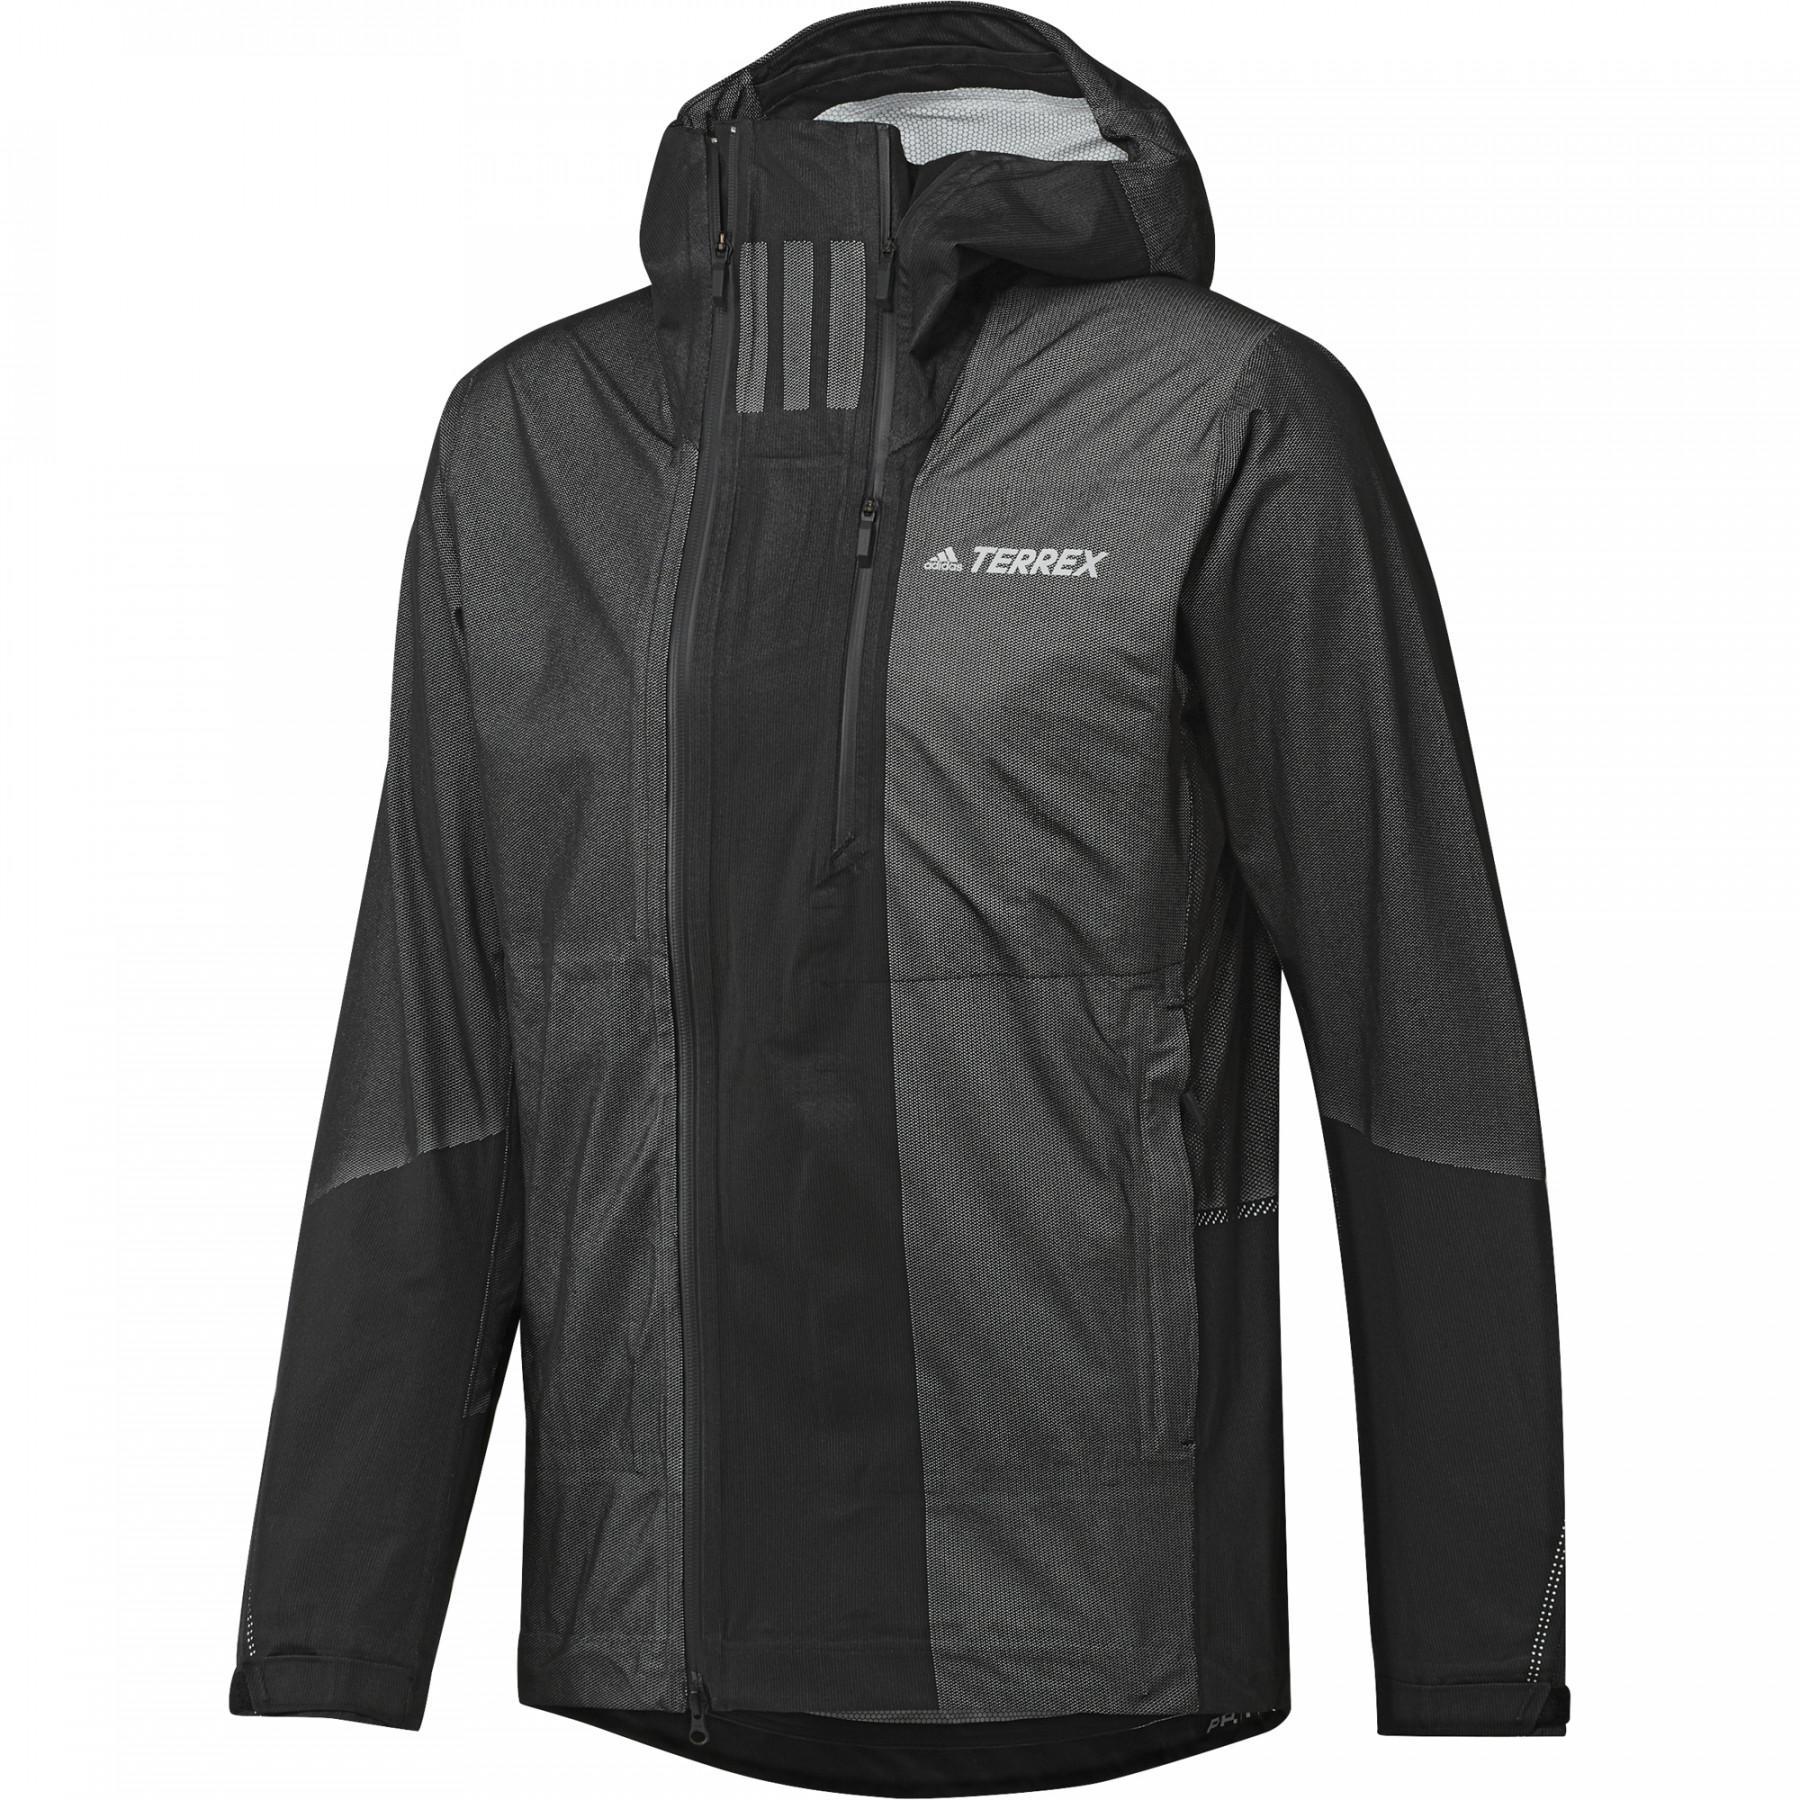 Jacket adidas Terrex Primeknit Rain